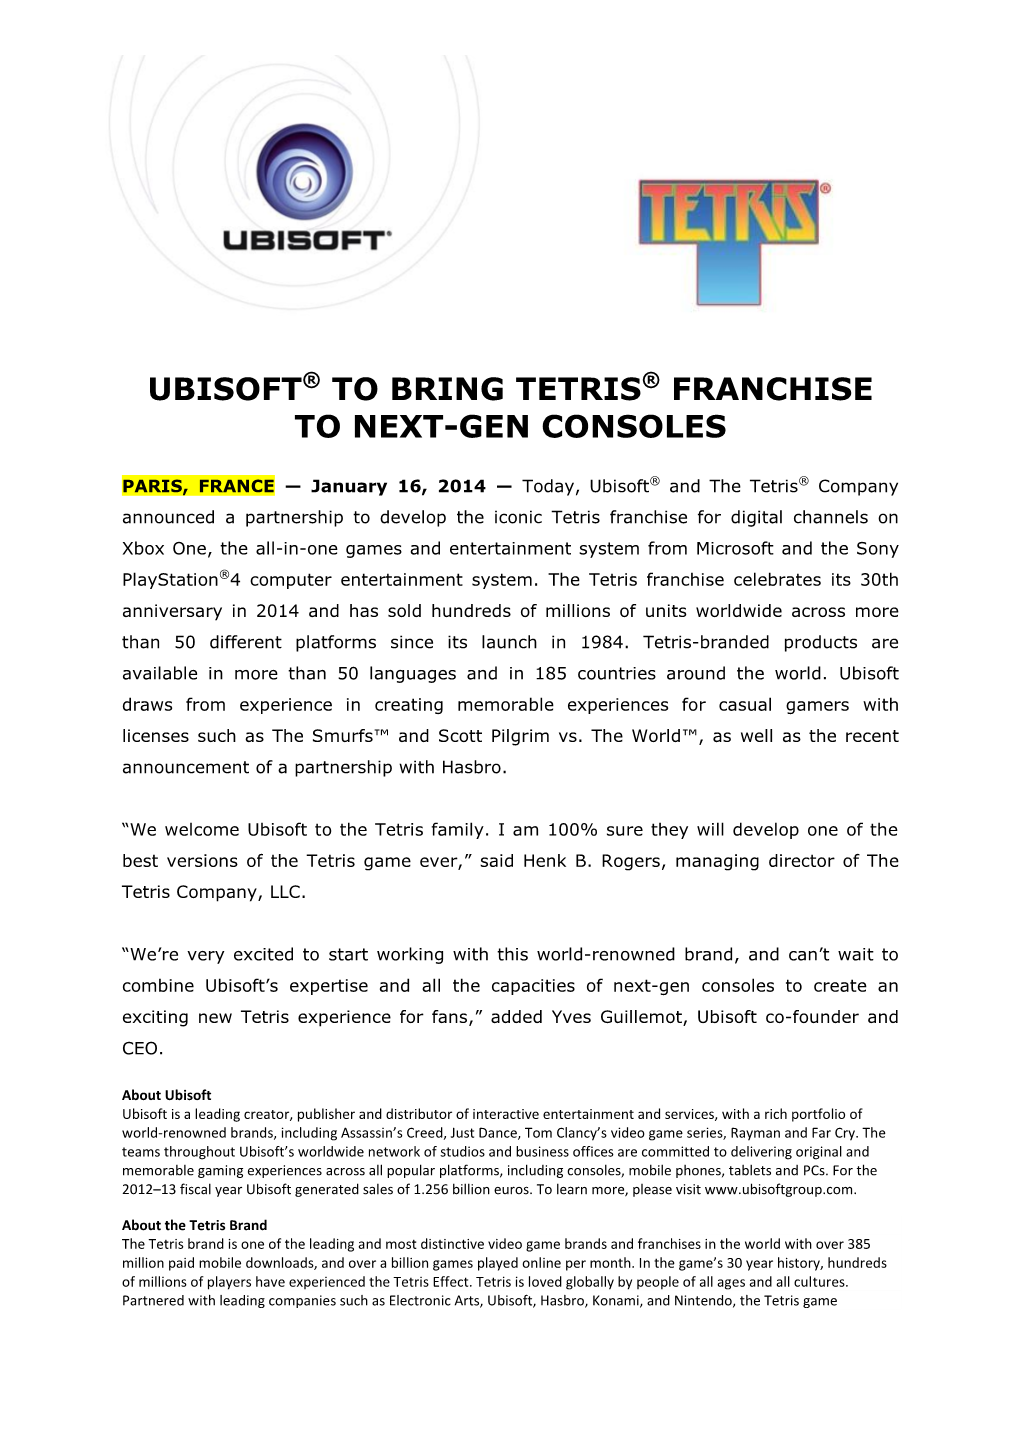 Ubisoft® to Bring Tetris® Franchise to Next-Gen Consoles